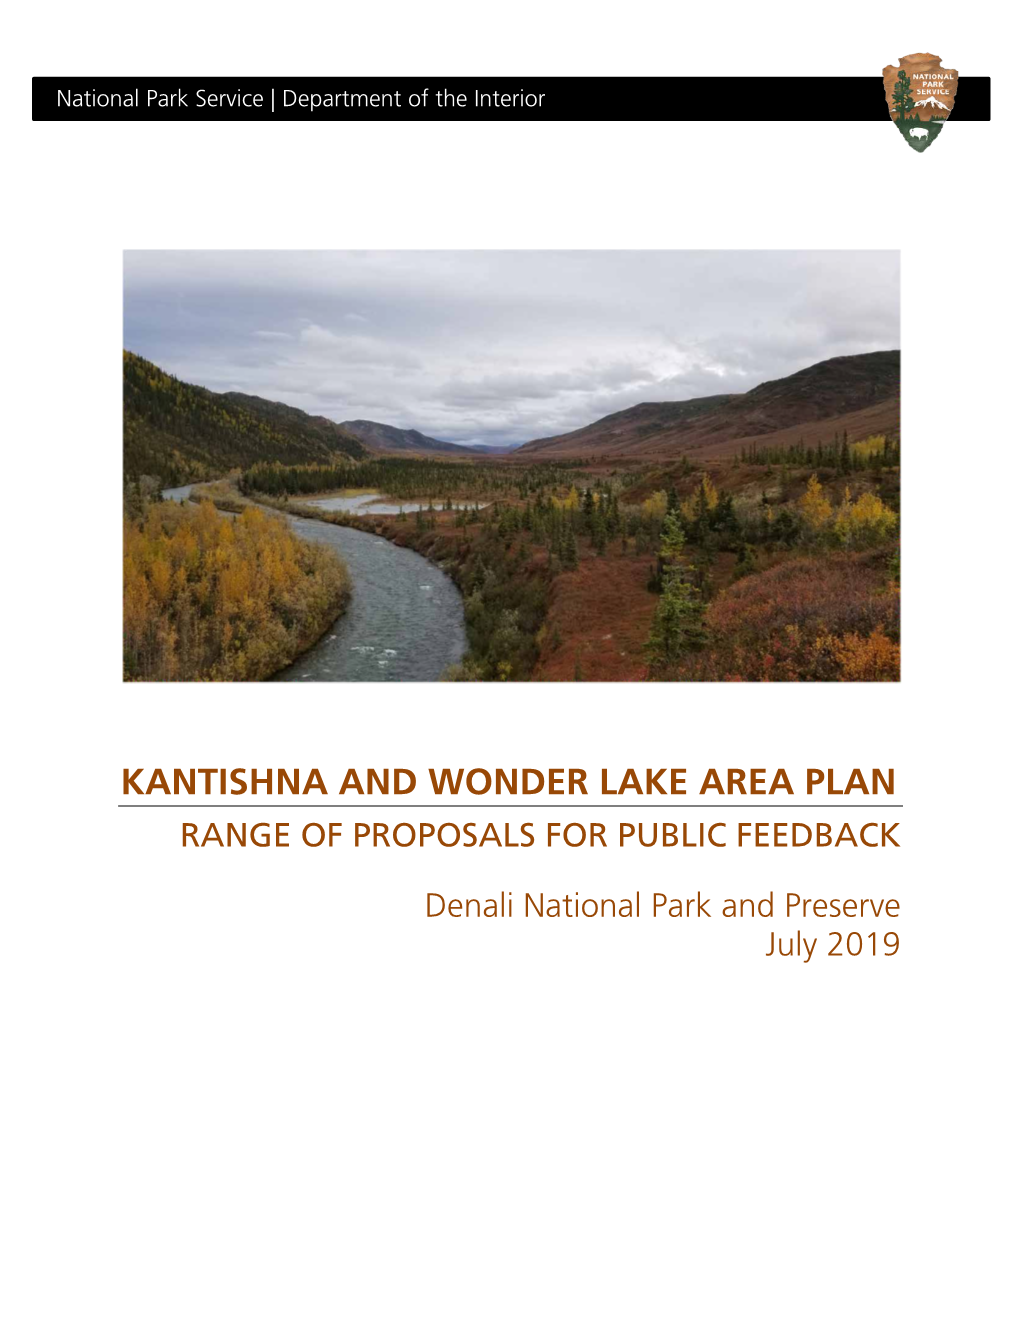 Kantishna and Wonder Lake Area Plan Range of Proposals for Public Feedback